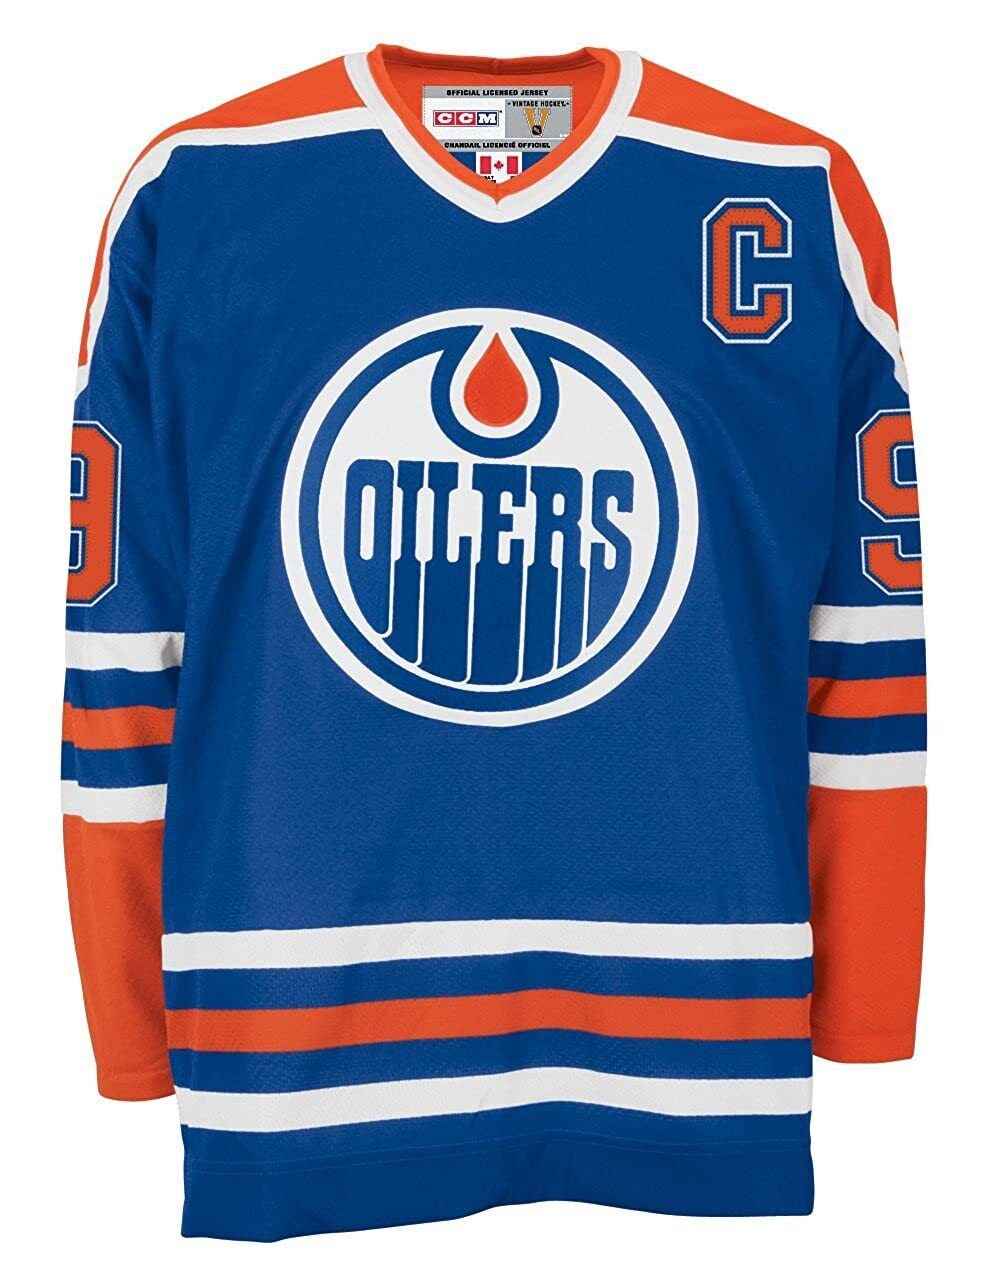 NHL Edmonton Oilers Custom Name Number 80s Throwback Vintage Away Jersey T- Shirt